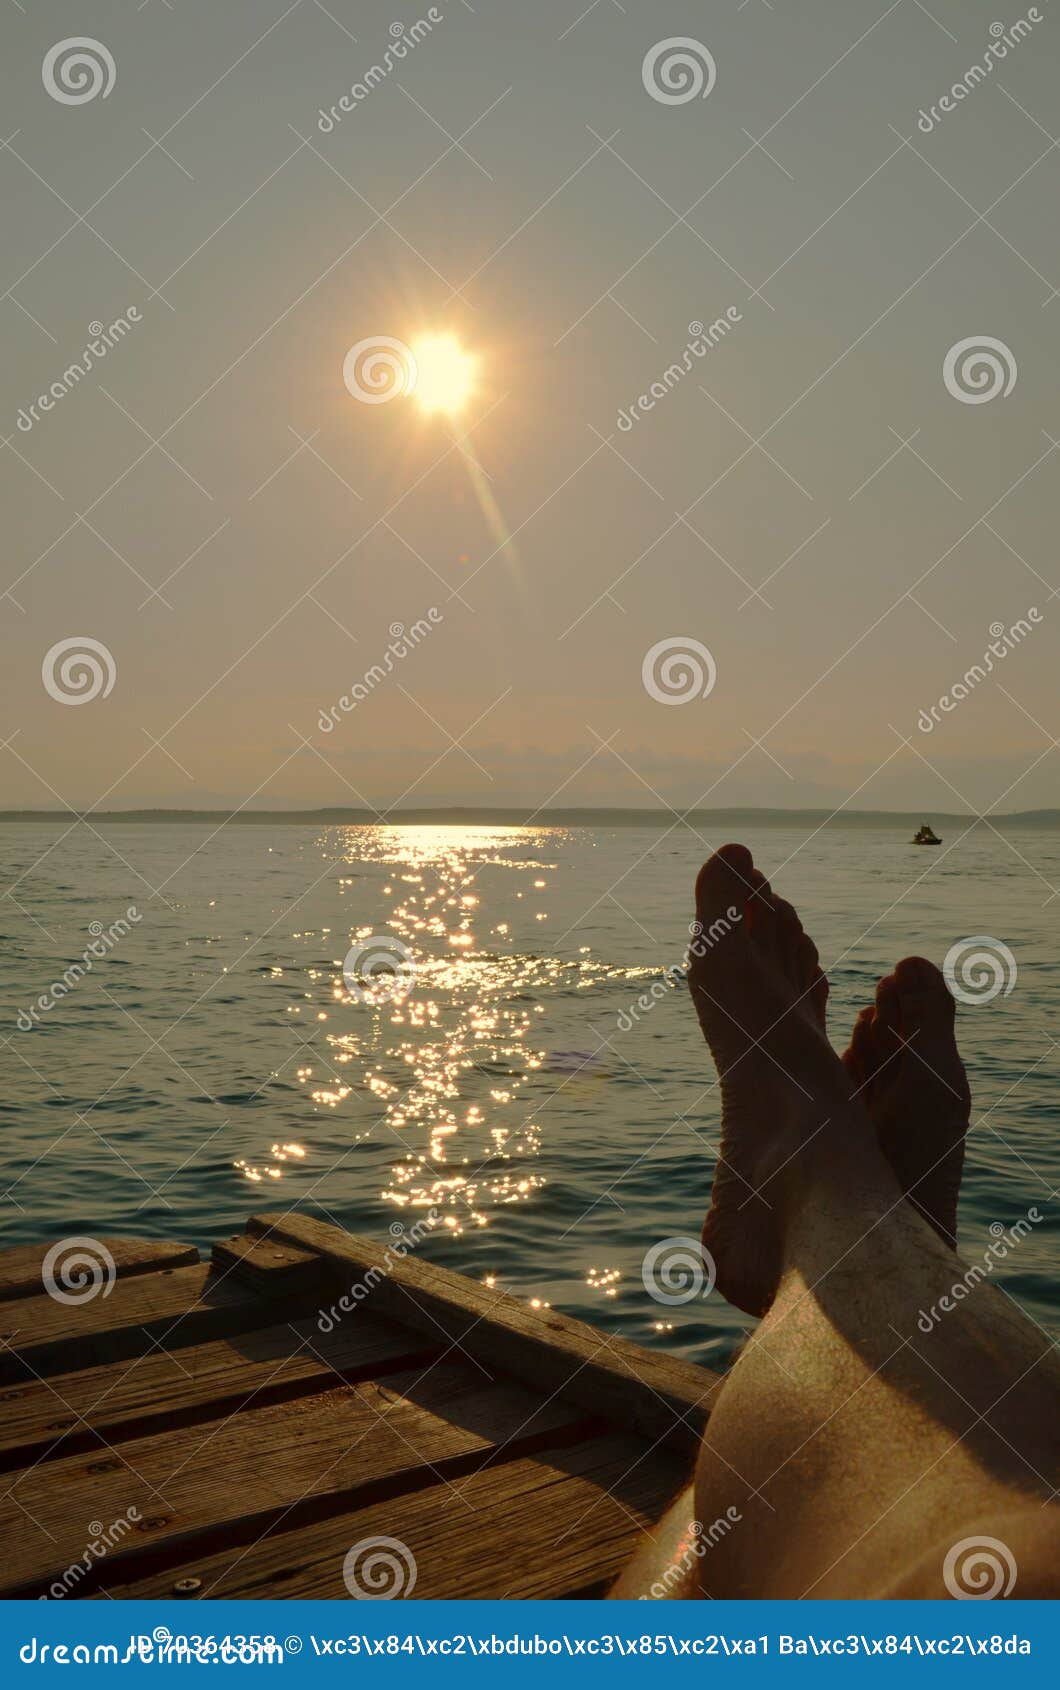 Lying on beach with crossed legs